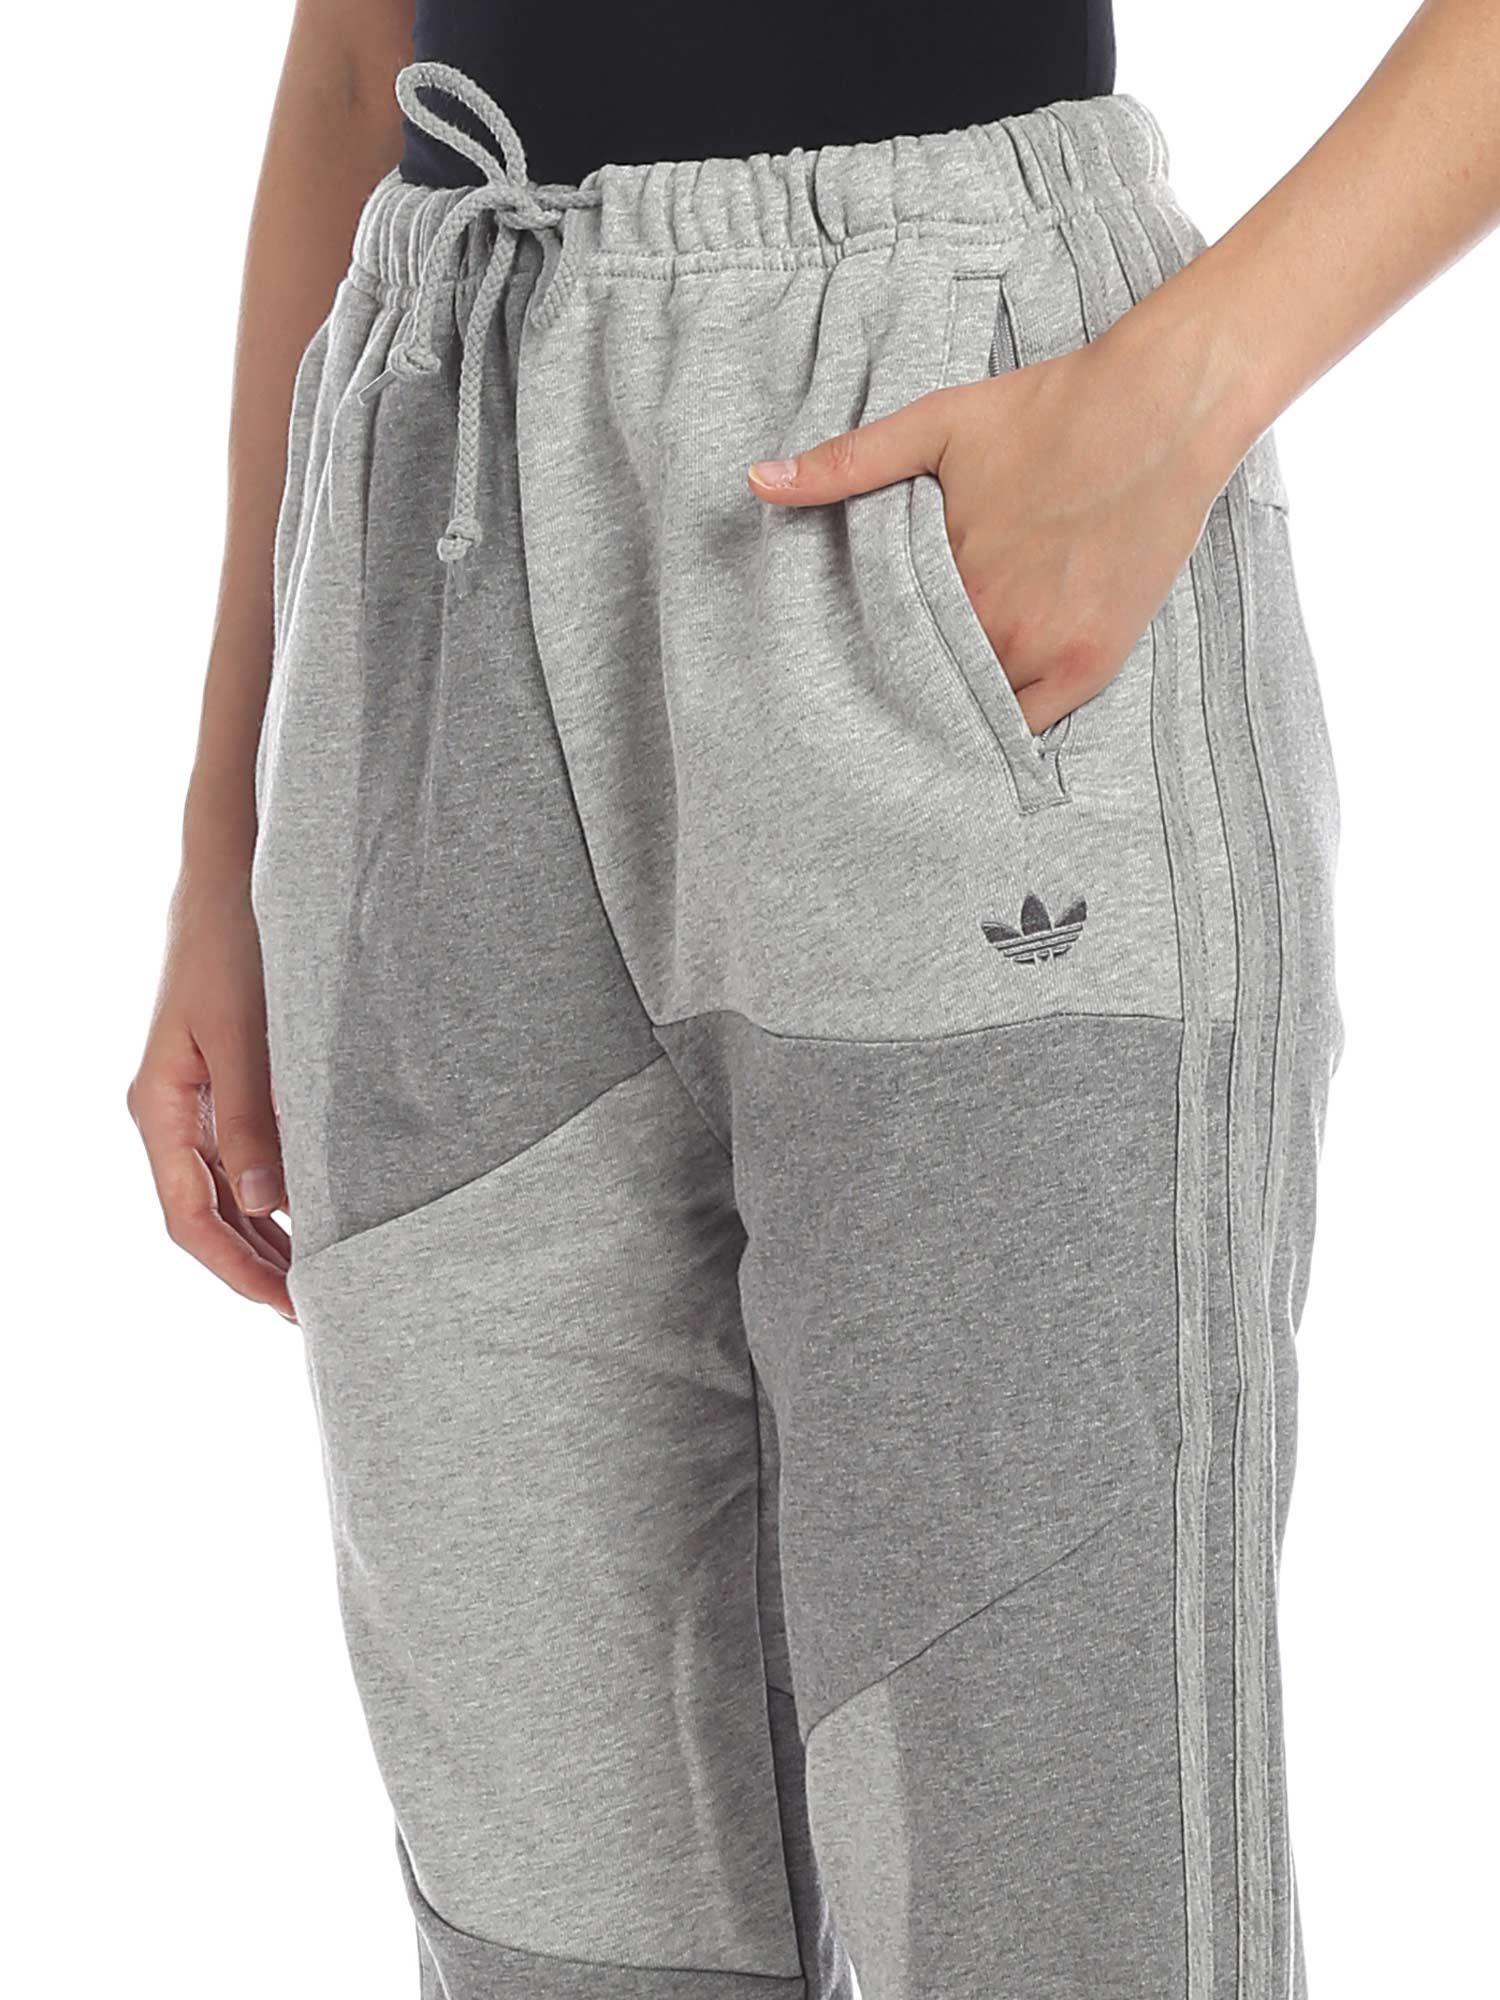 adidas Originals Daniëlle Cathari Pants In Grey in Gray - Lyst